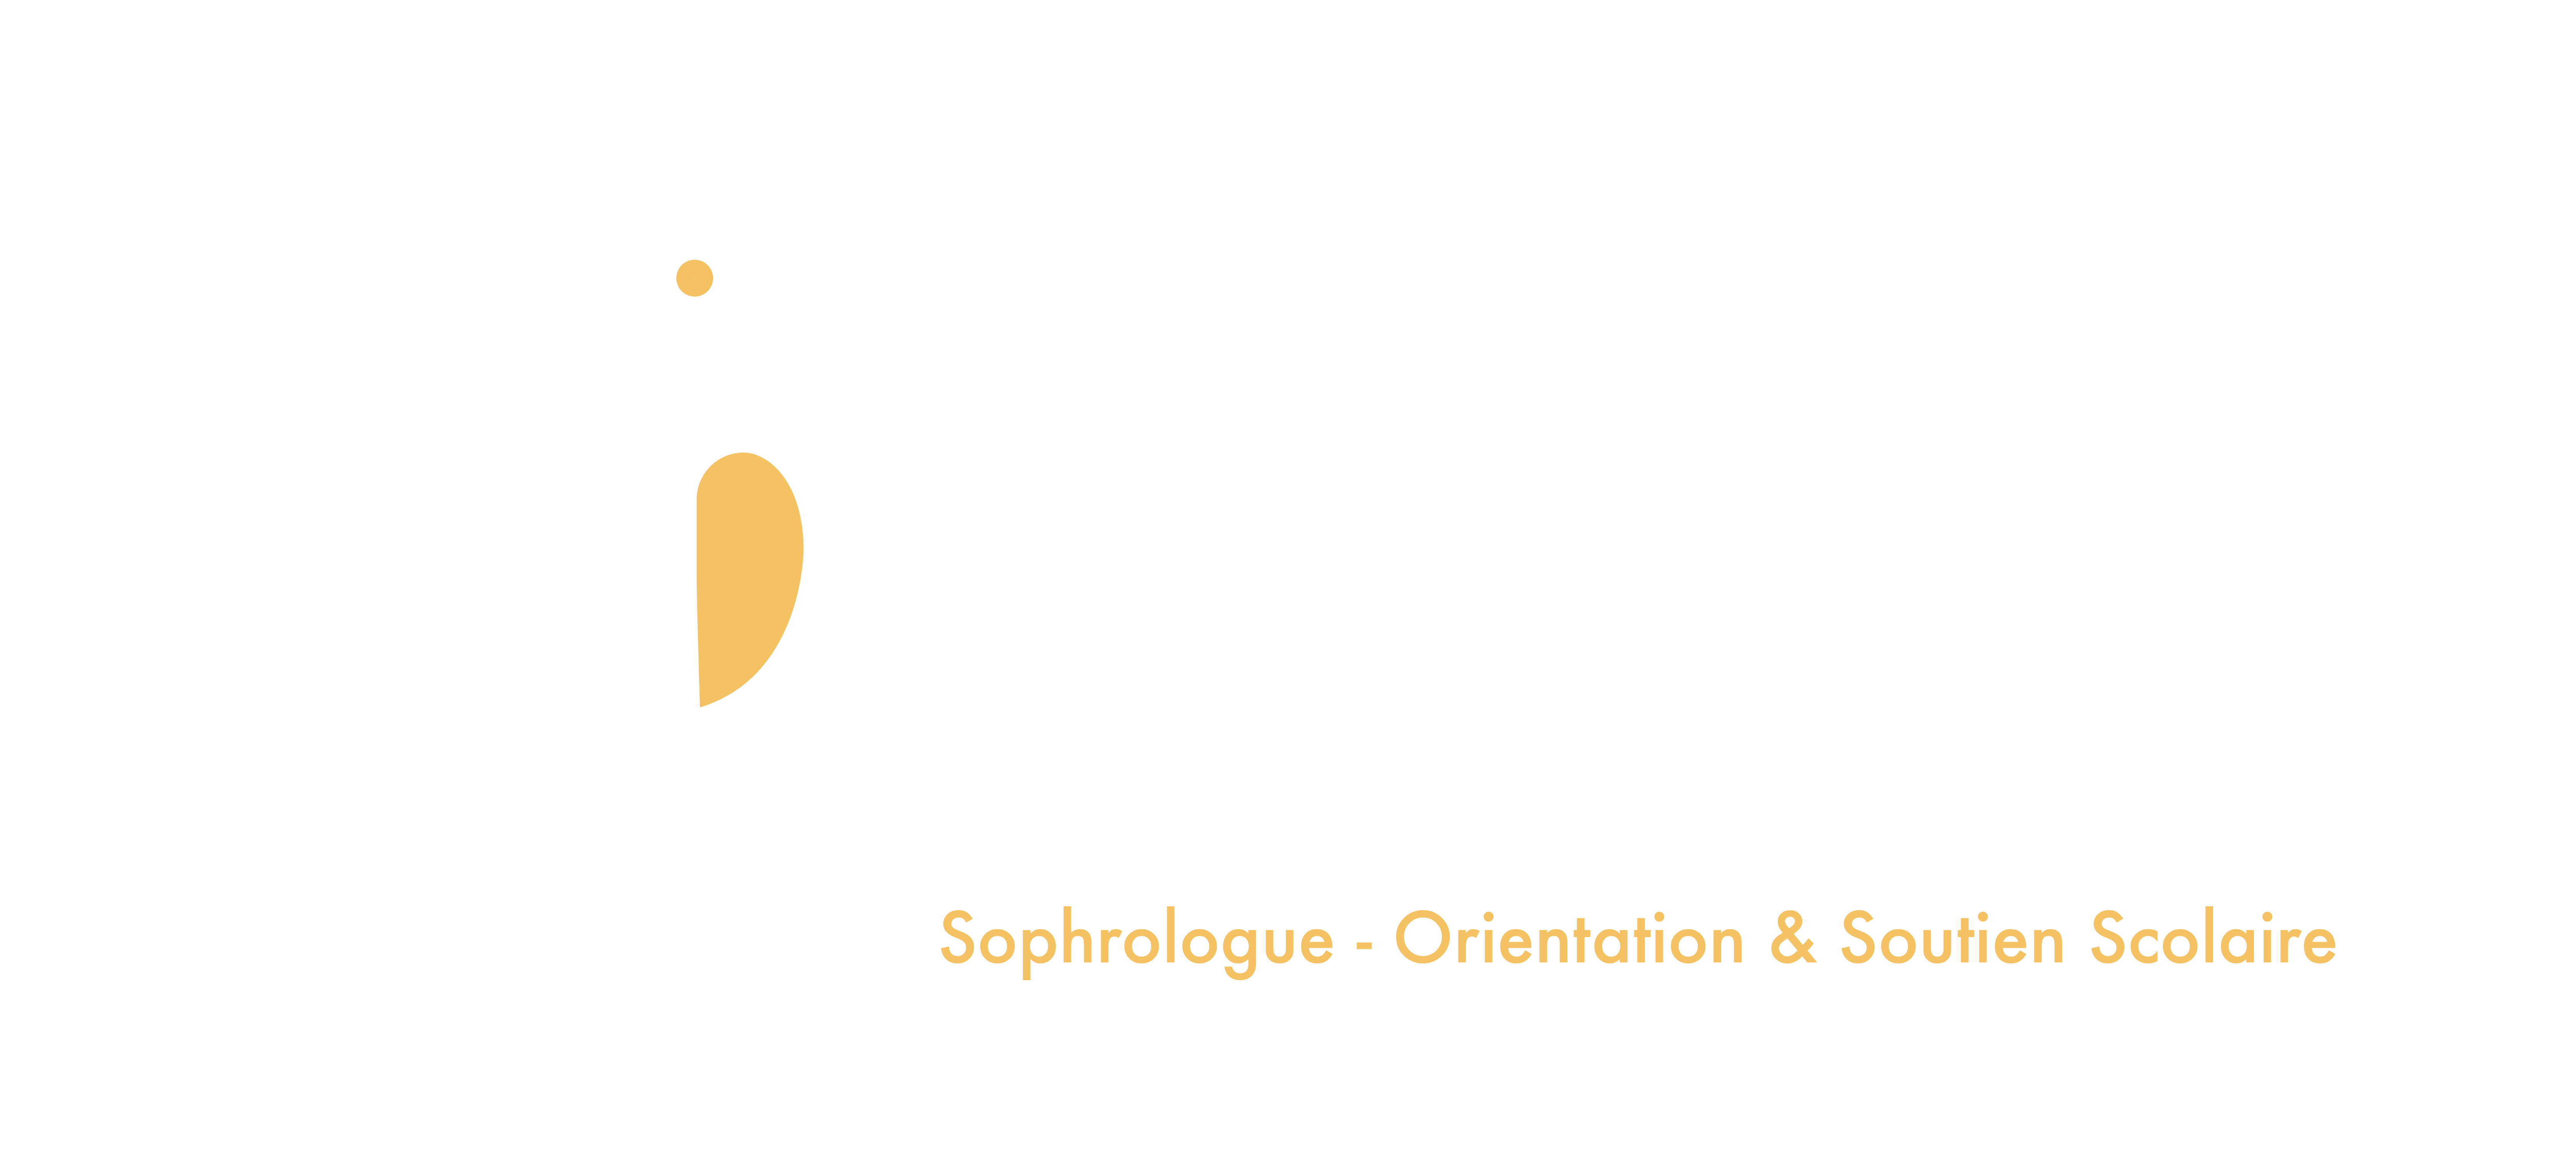 Marie Line Paholik - Sophrocoach - Logo blanc